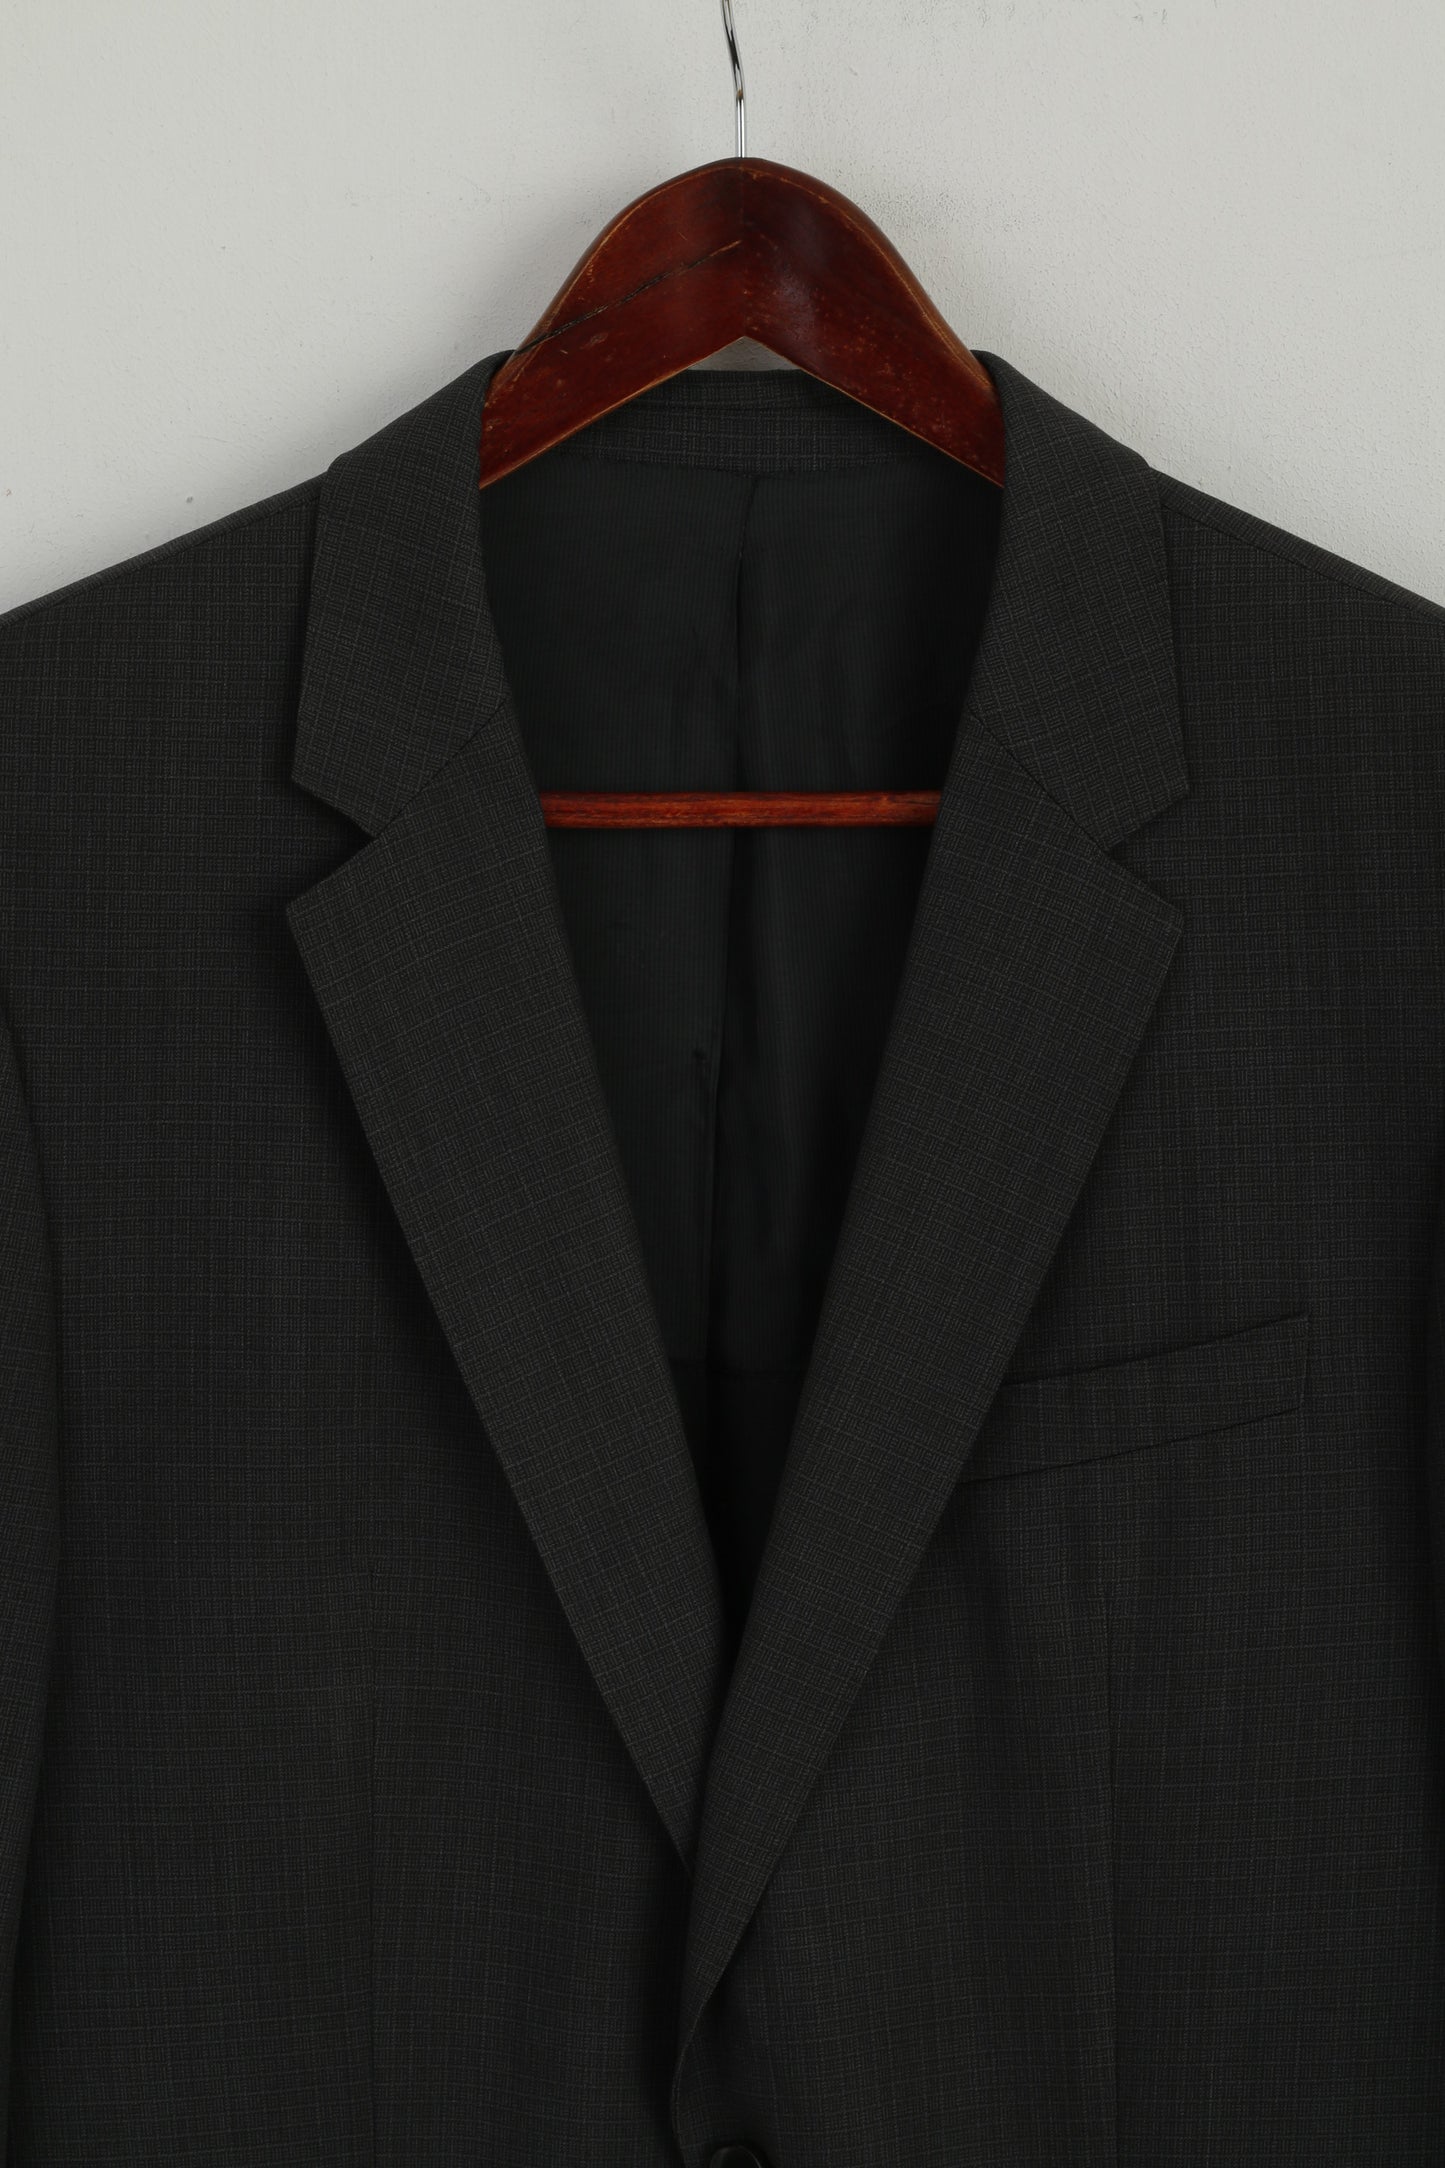 Hugo Boss Men 50 40 Blazer Grey Wool Single Breasted  Super 100 Jacket